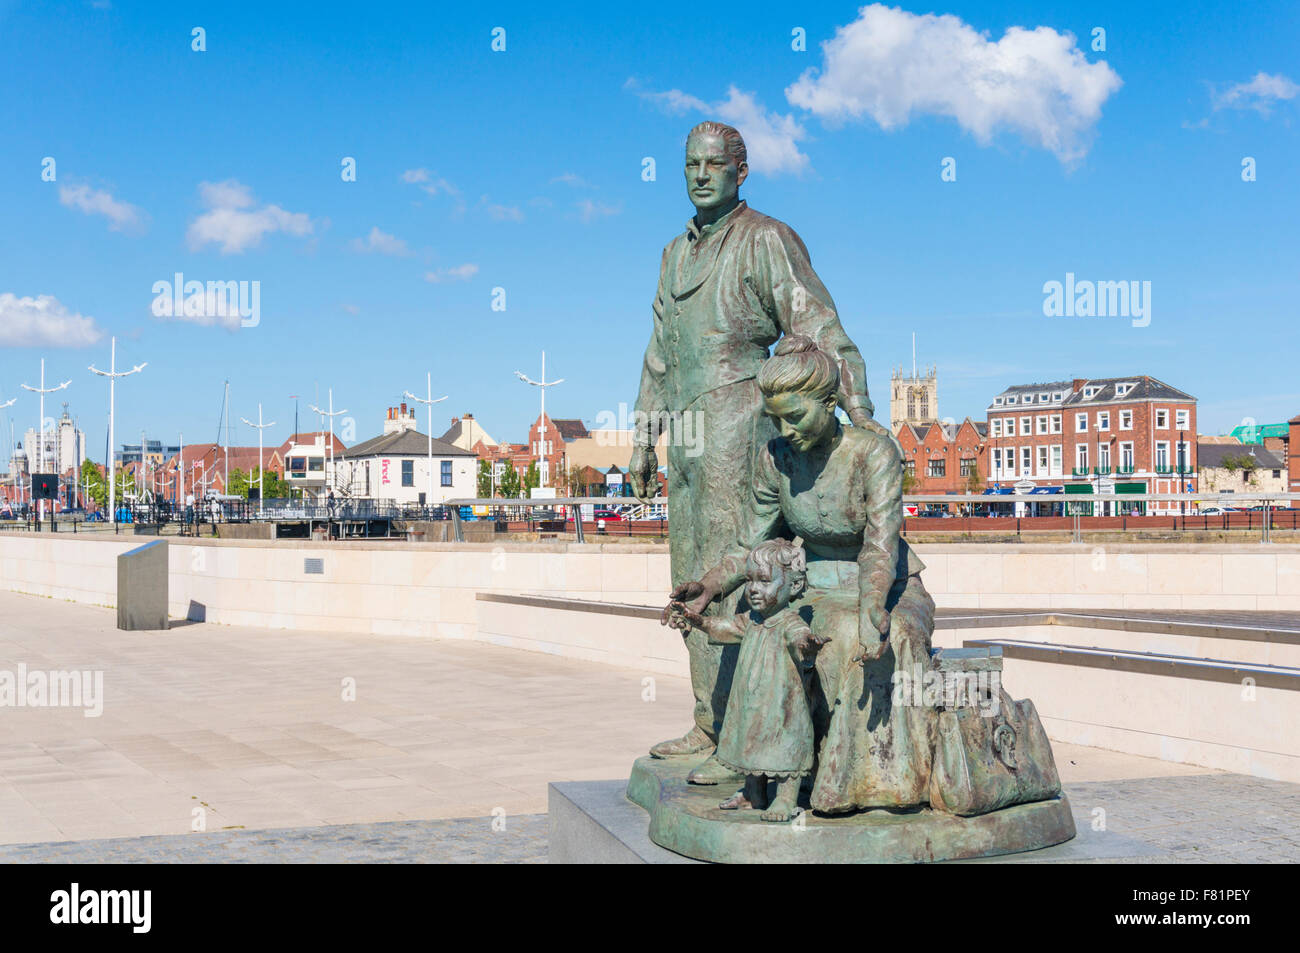 A Bronze statue The crossing by Mark DeGraffenried at Albert Dock hull docks Kingston upon Hull Yorkshire England UK GB EU Stock Photo